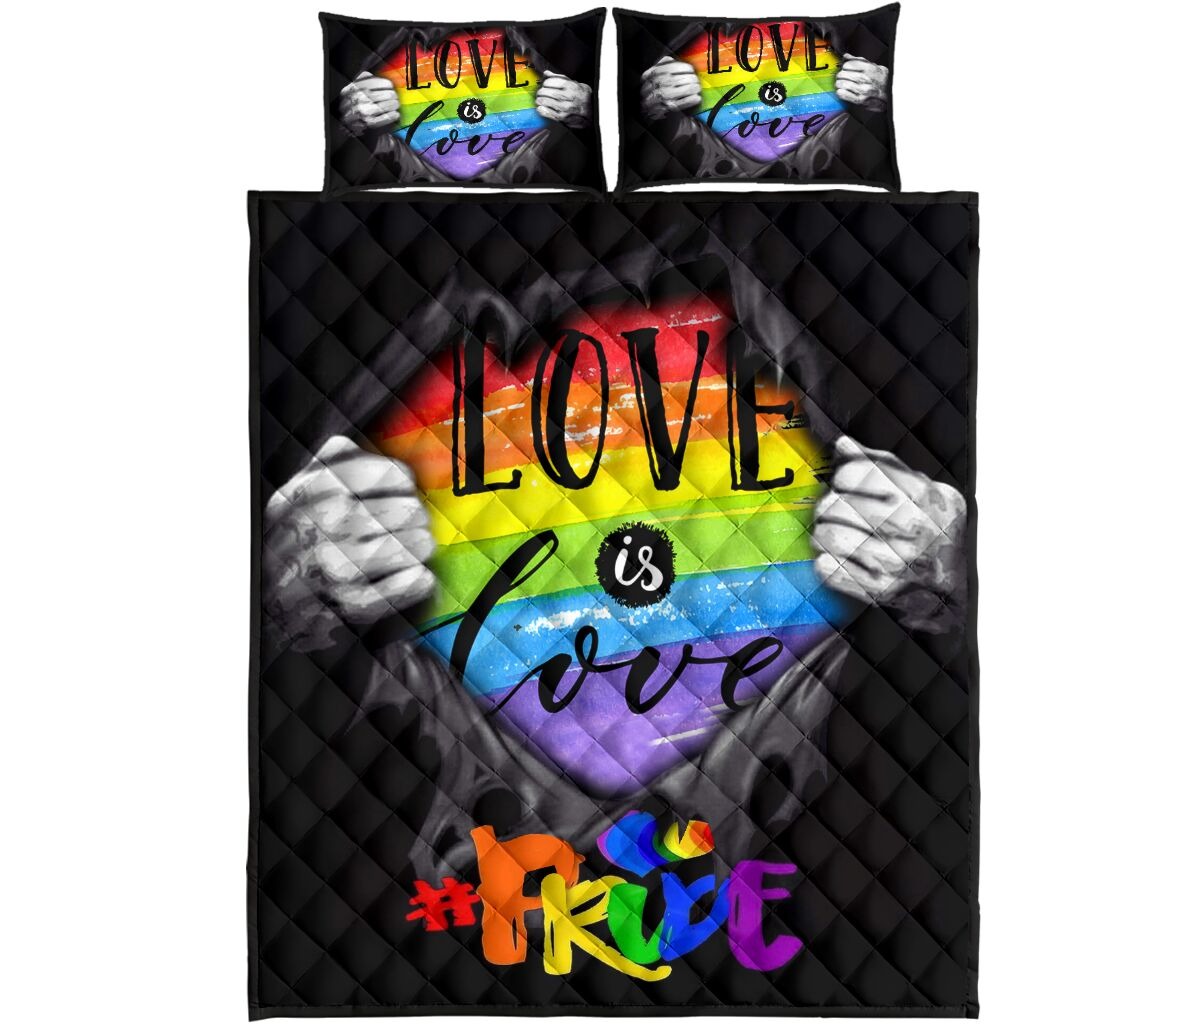 LGBT love is love quilt bedding set4